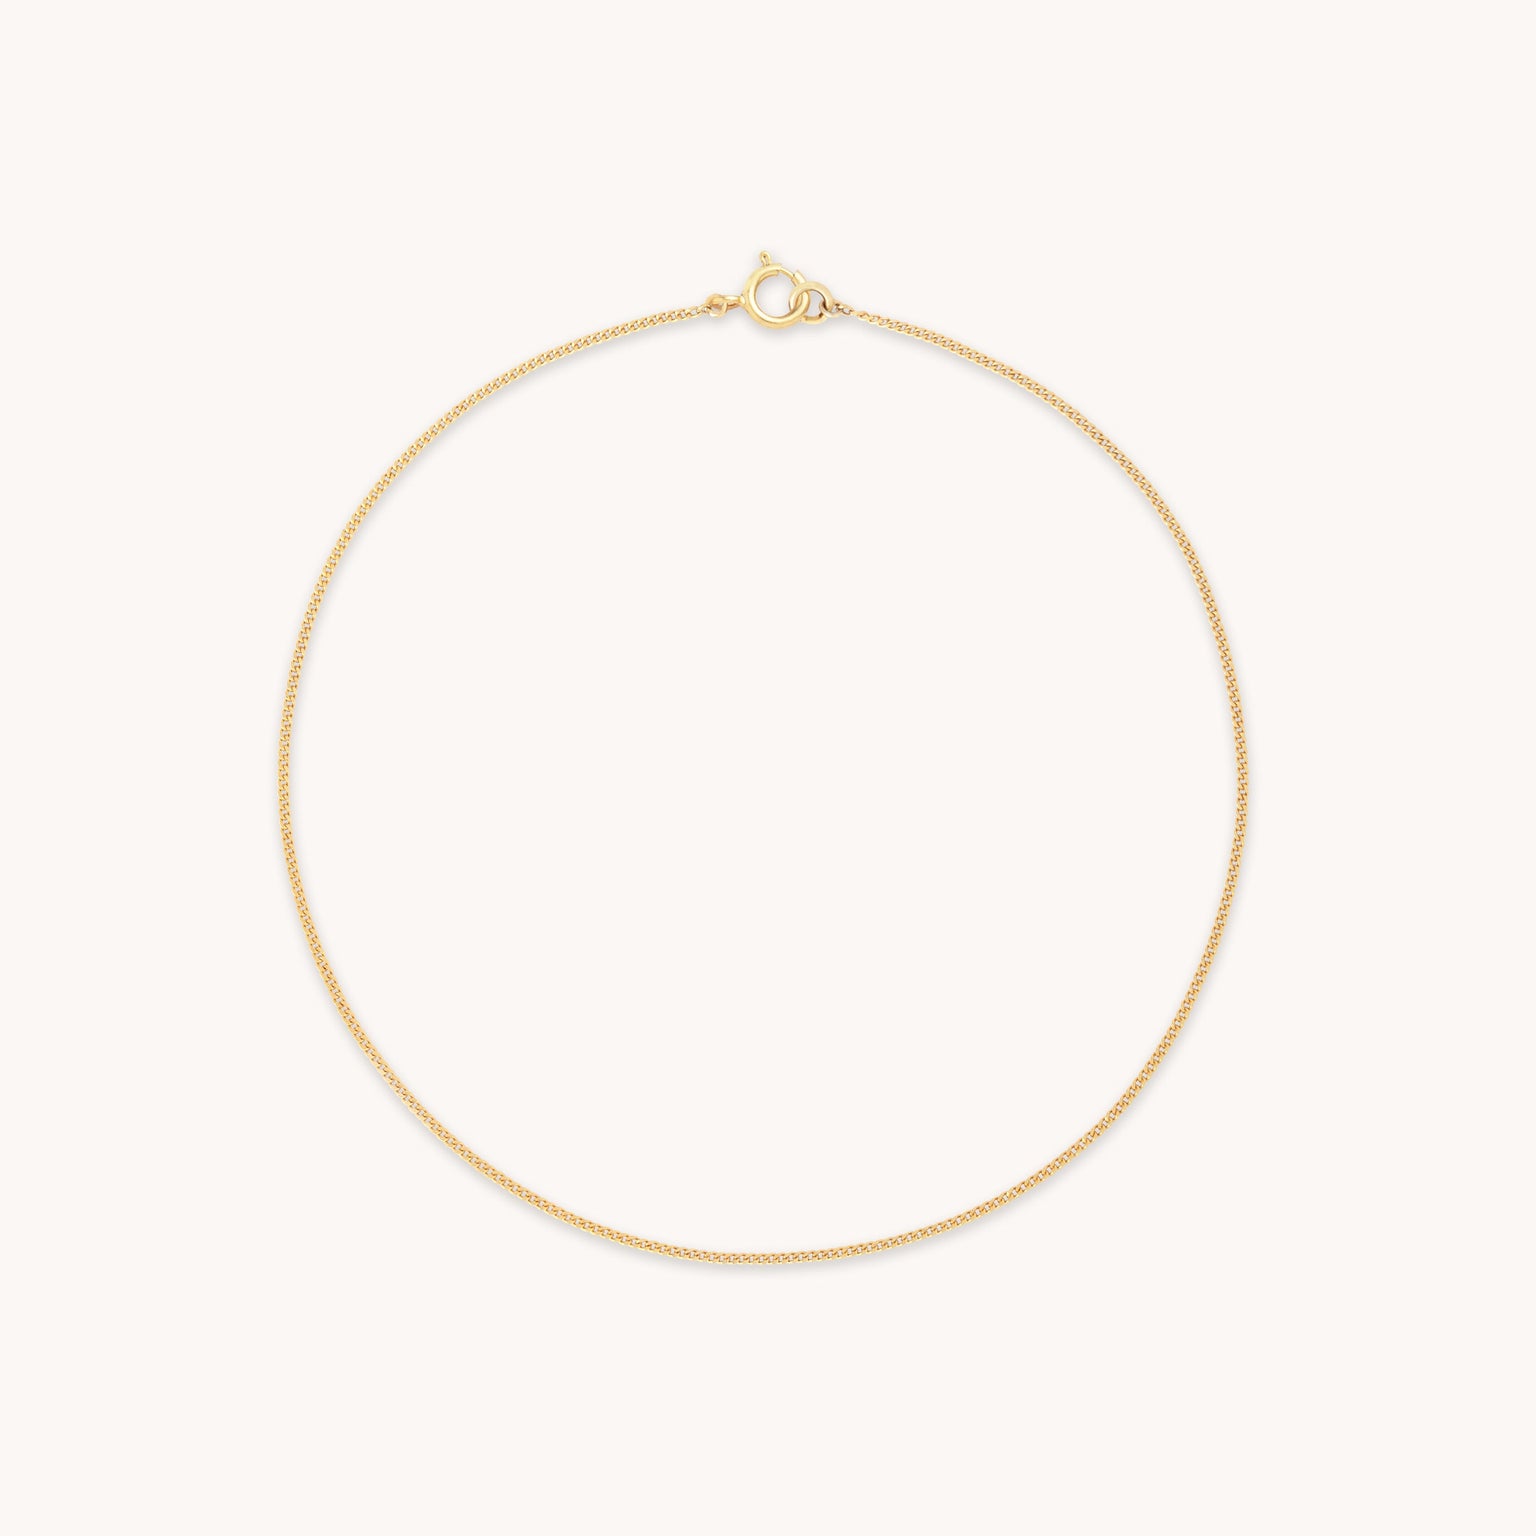 Miyu Chain Bracelet in Solid Gold